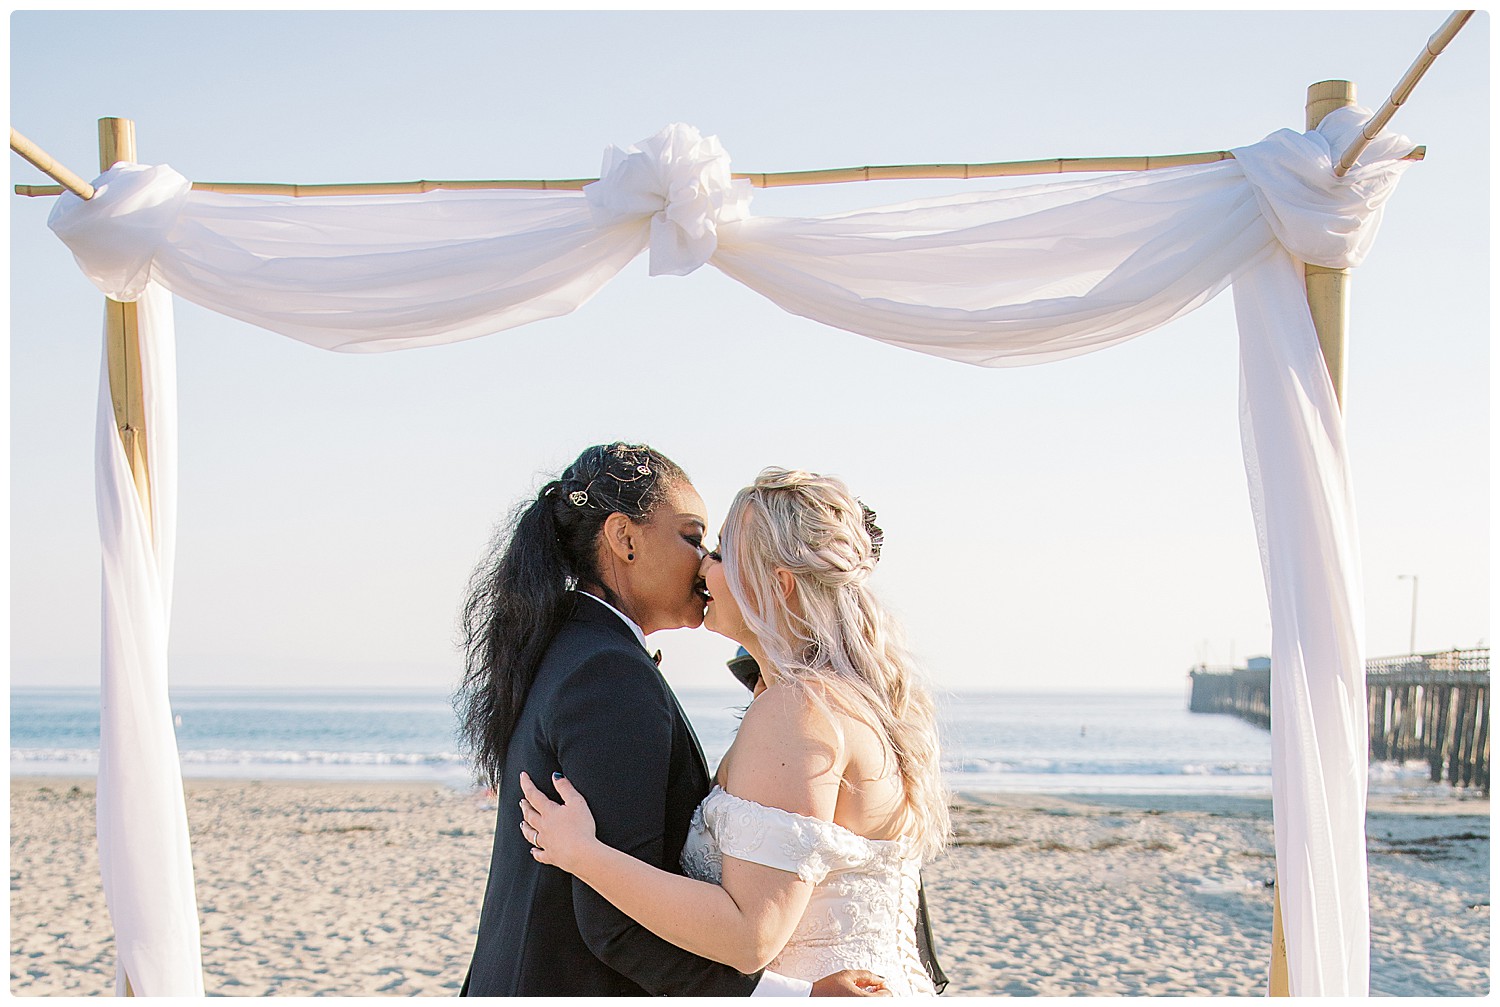 Wedding photographer - 2 brides kiss - they are legally wed -Avila Beach California wedding